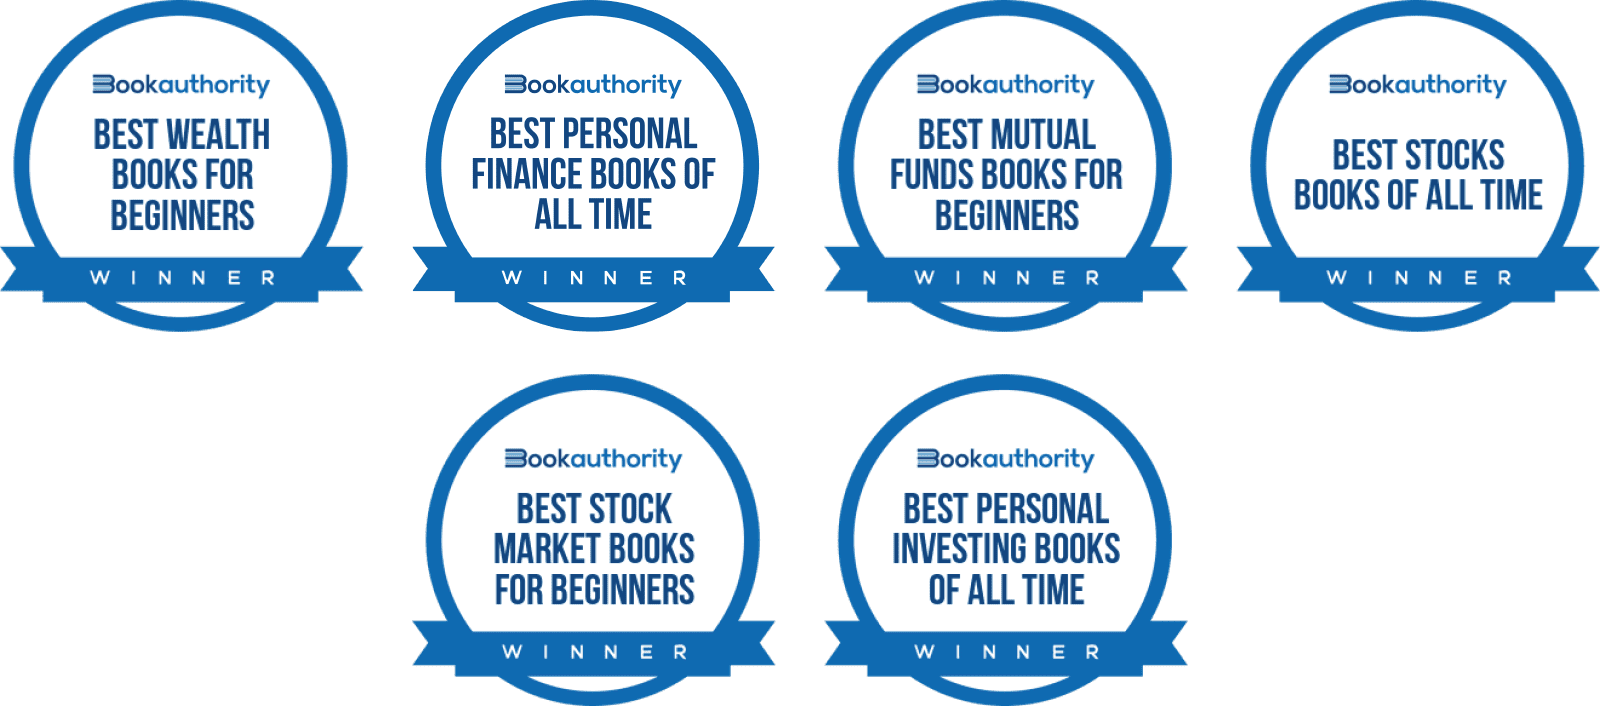 BookAuthorityBadges_Investing